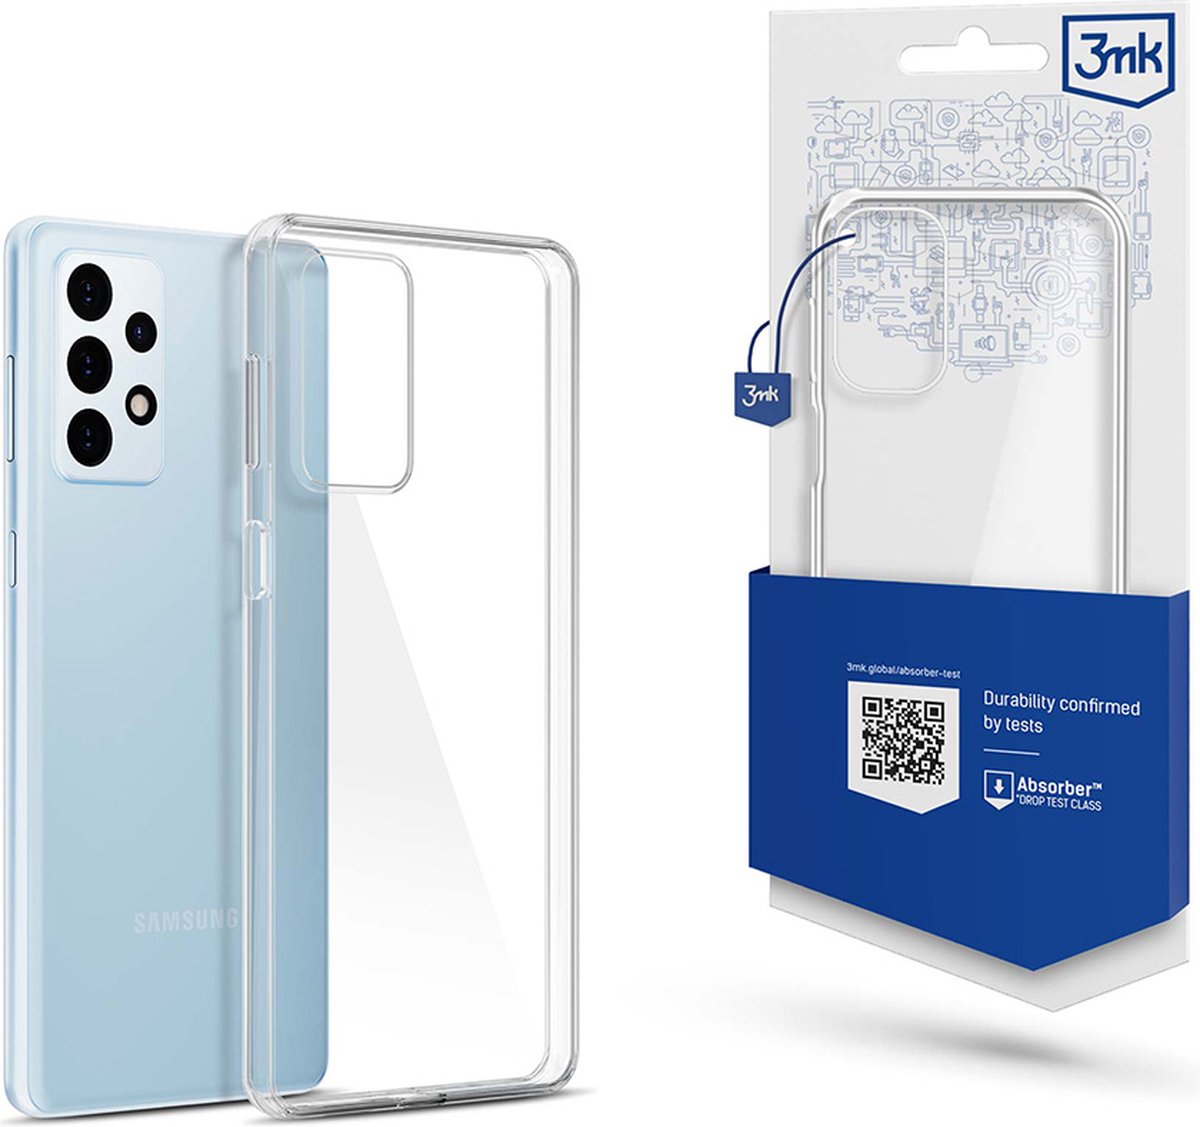 3mk - Samsung Galaxy A23 5G - Telefoonhoesje - Clear Case - Transparant